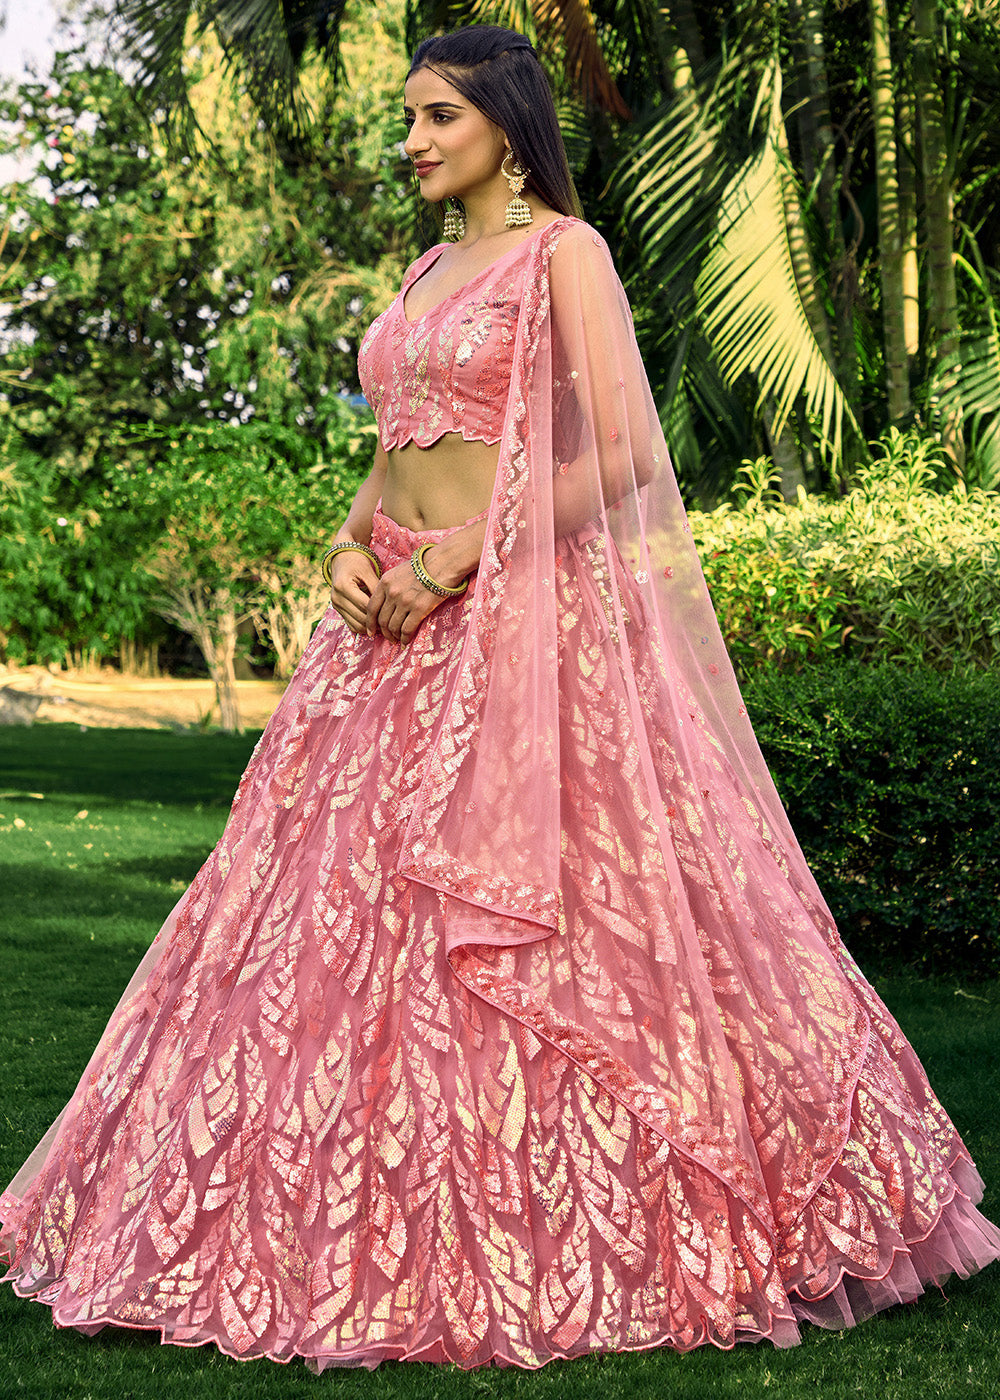 Buy Now Pink Multi Sequins & Thread Wedding Lehenga Choli Online in USA, UK, Canada & Worldwide at Empress Clothing. 